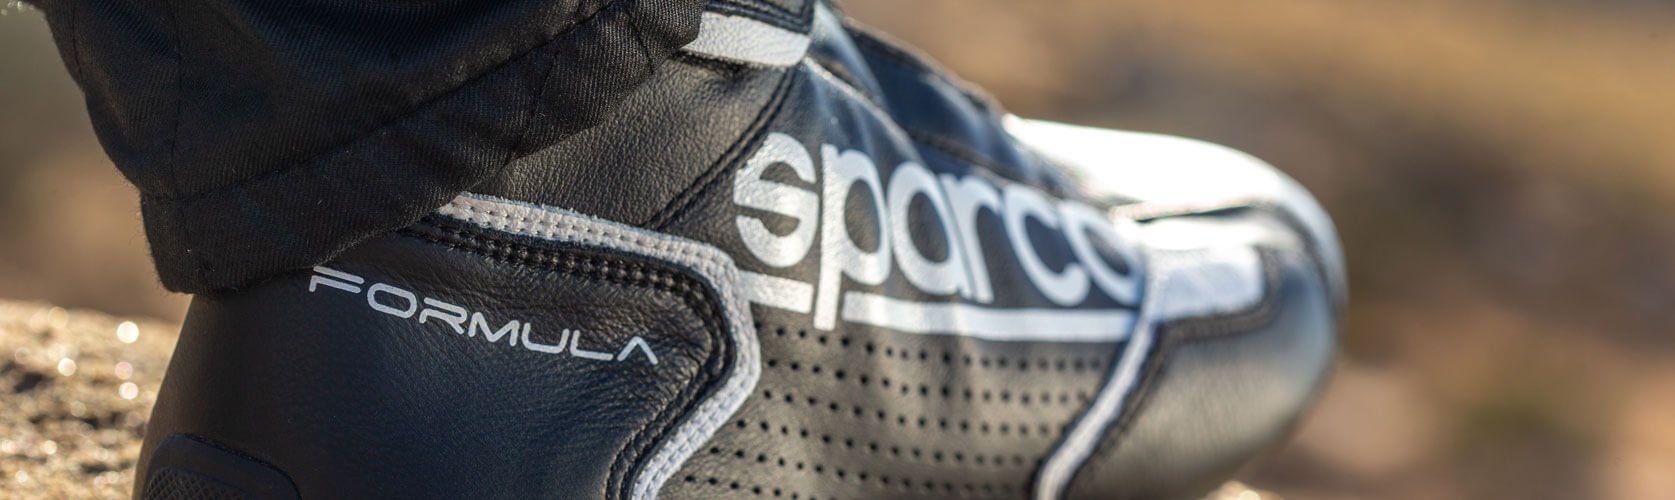 Sparco Racing Shoe